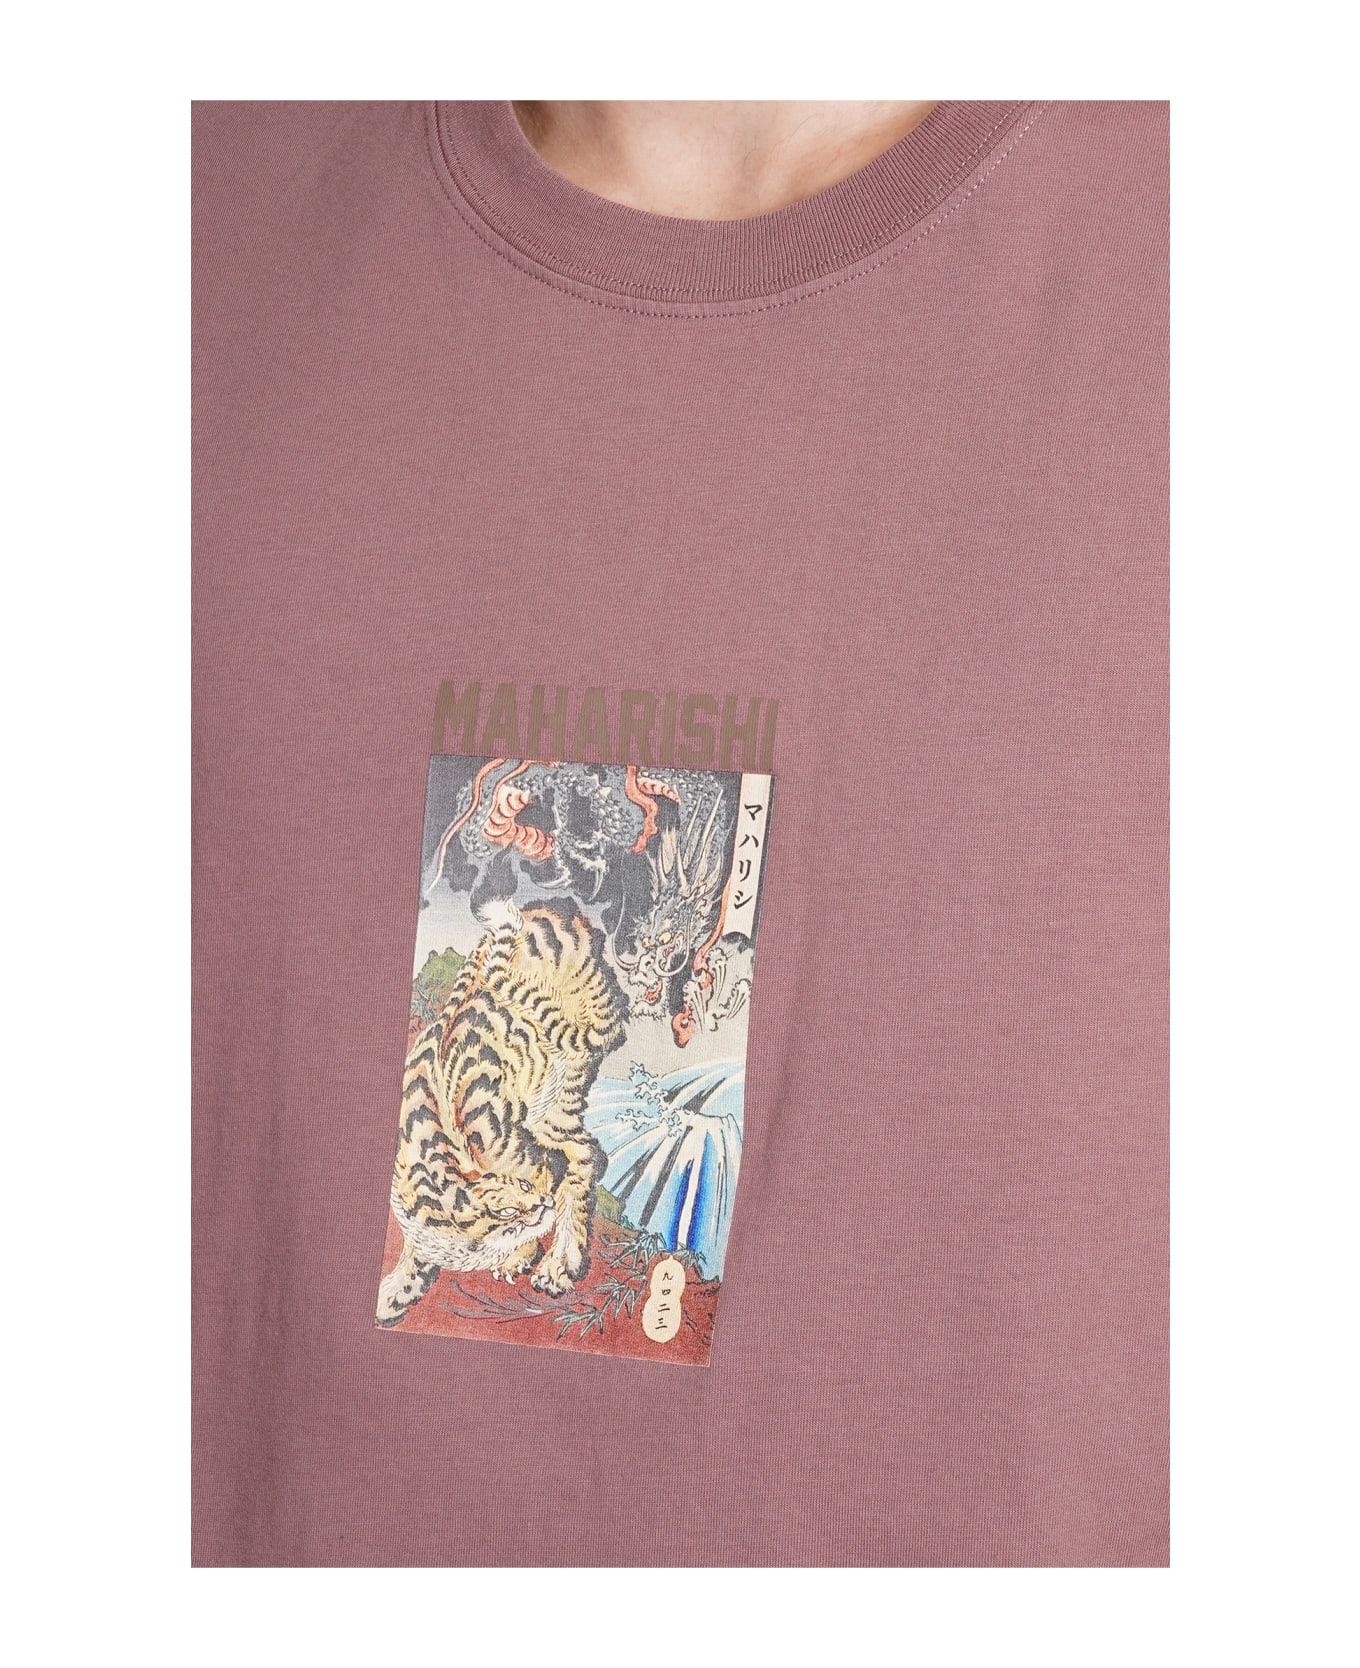 Maharishi T-shirt In Viola Cotton - Viola